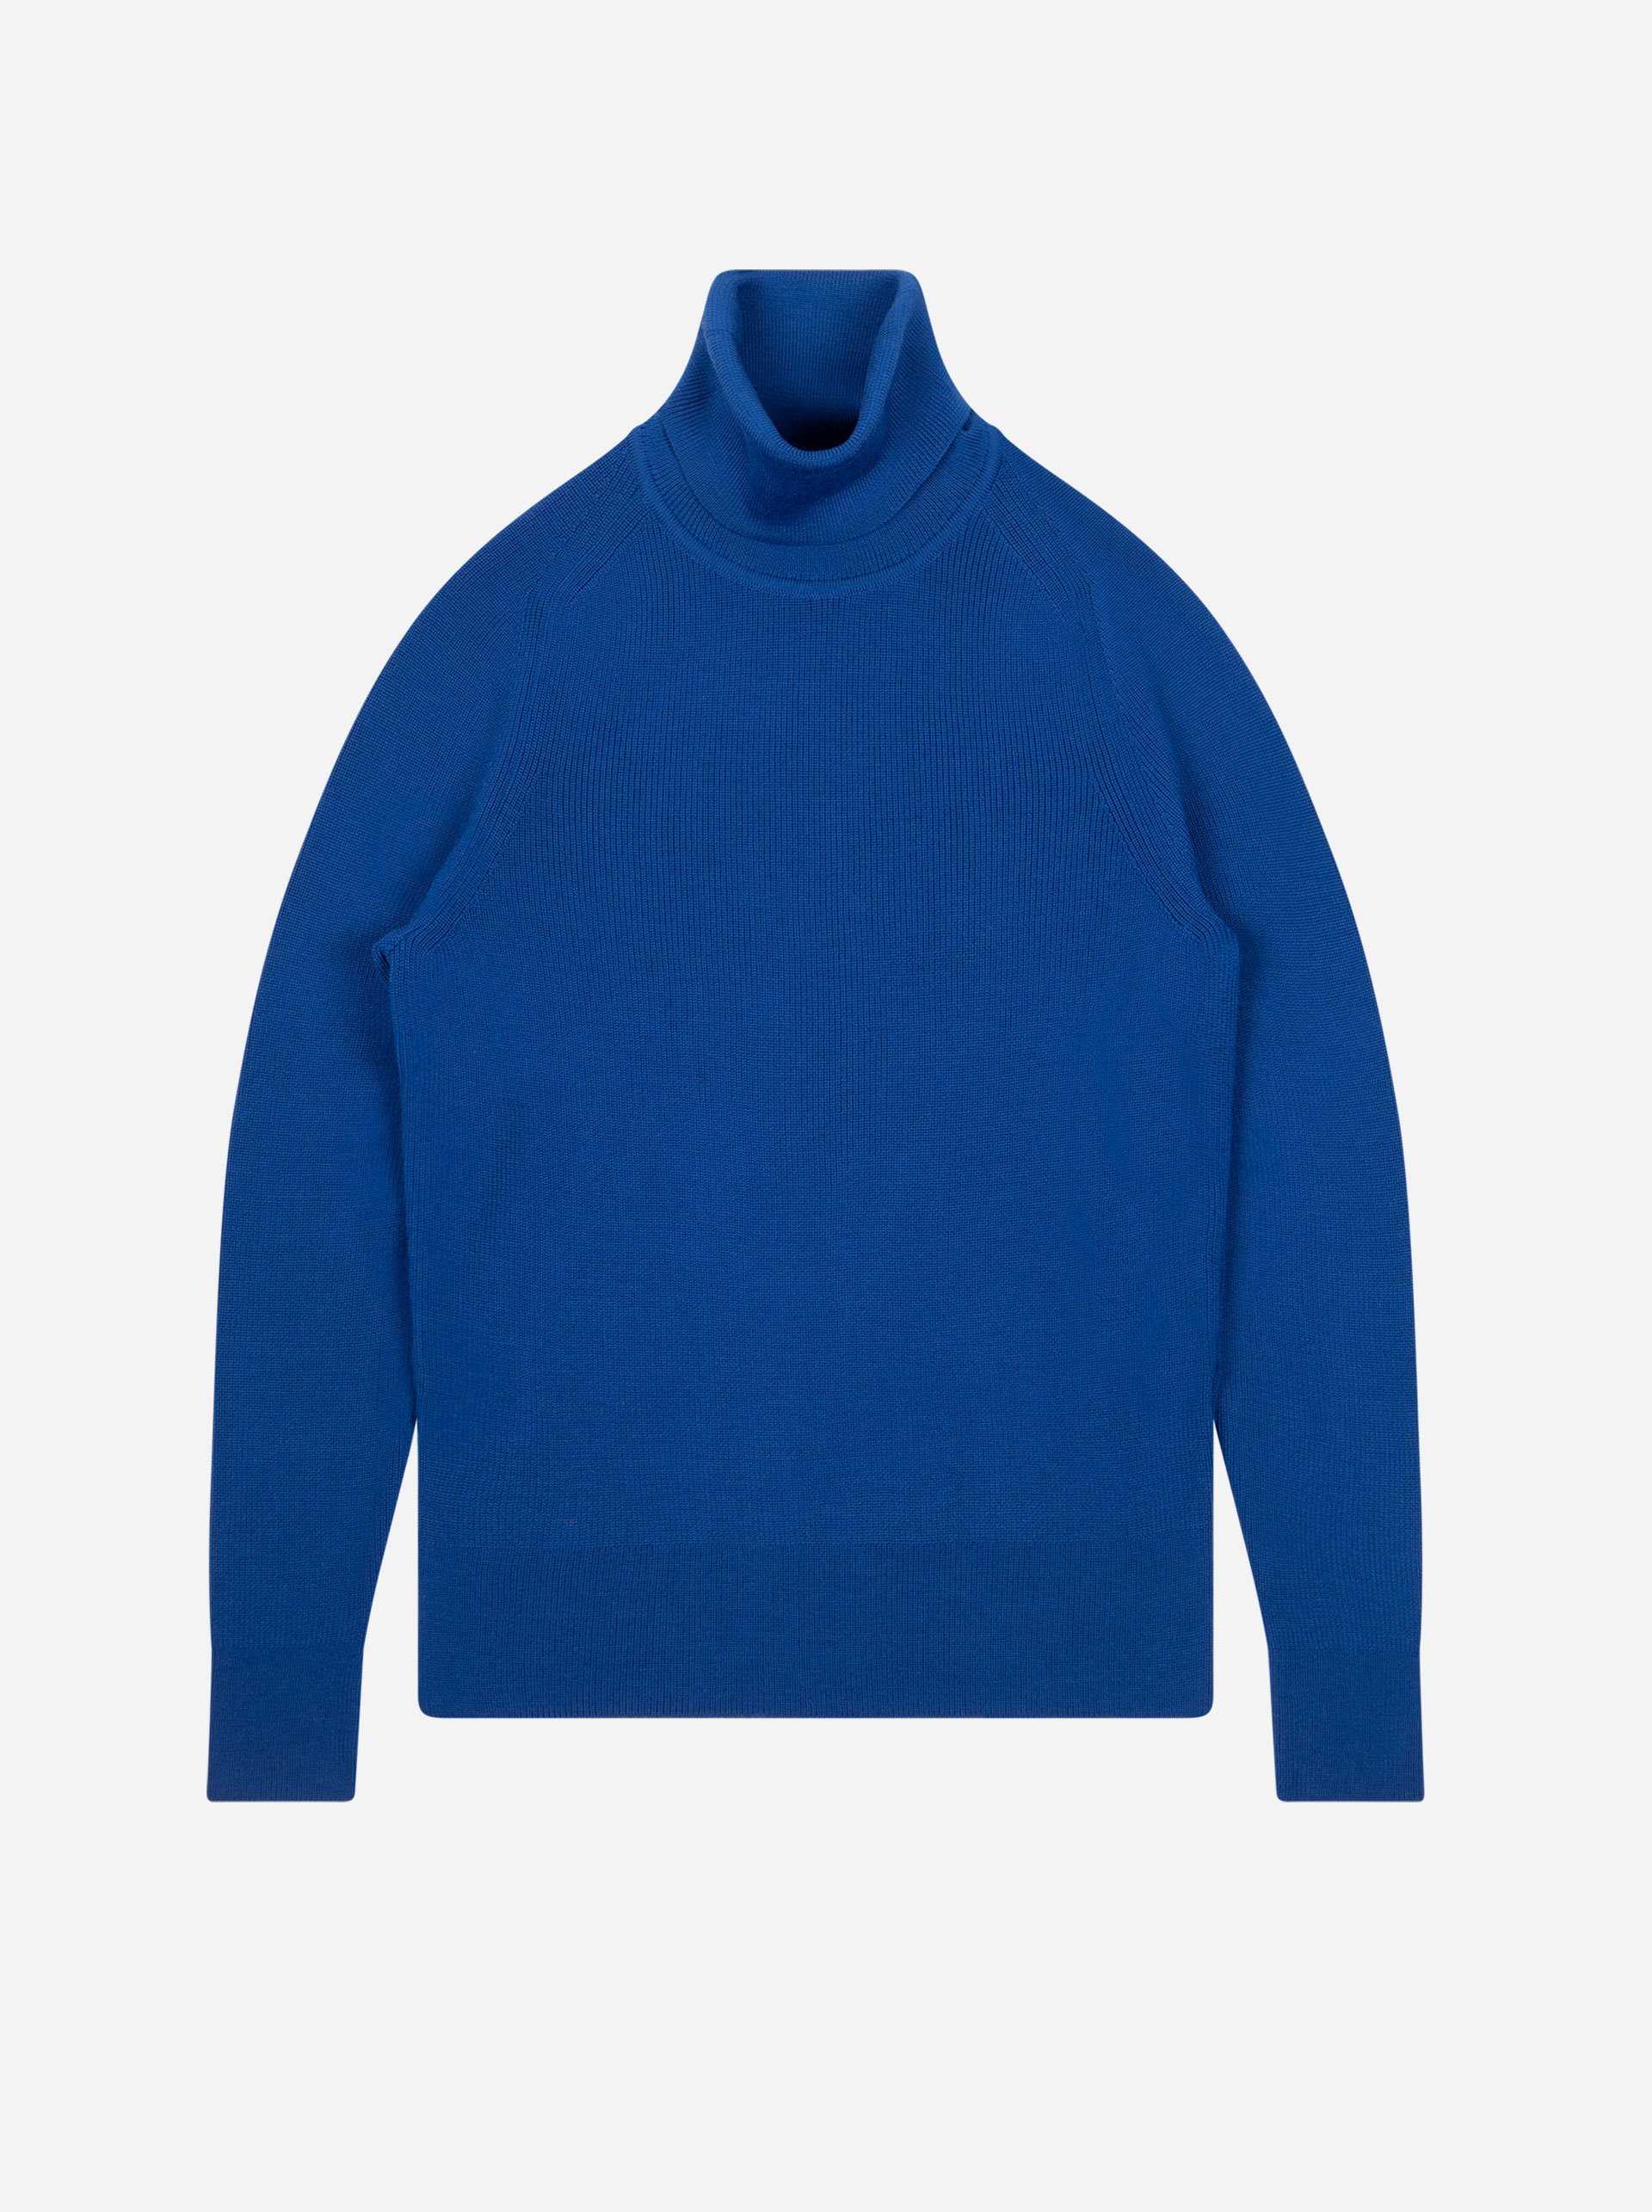 Teym - Turtleneck - The Merino Sweater - Men - Cobalt blue - 4